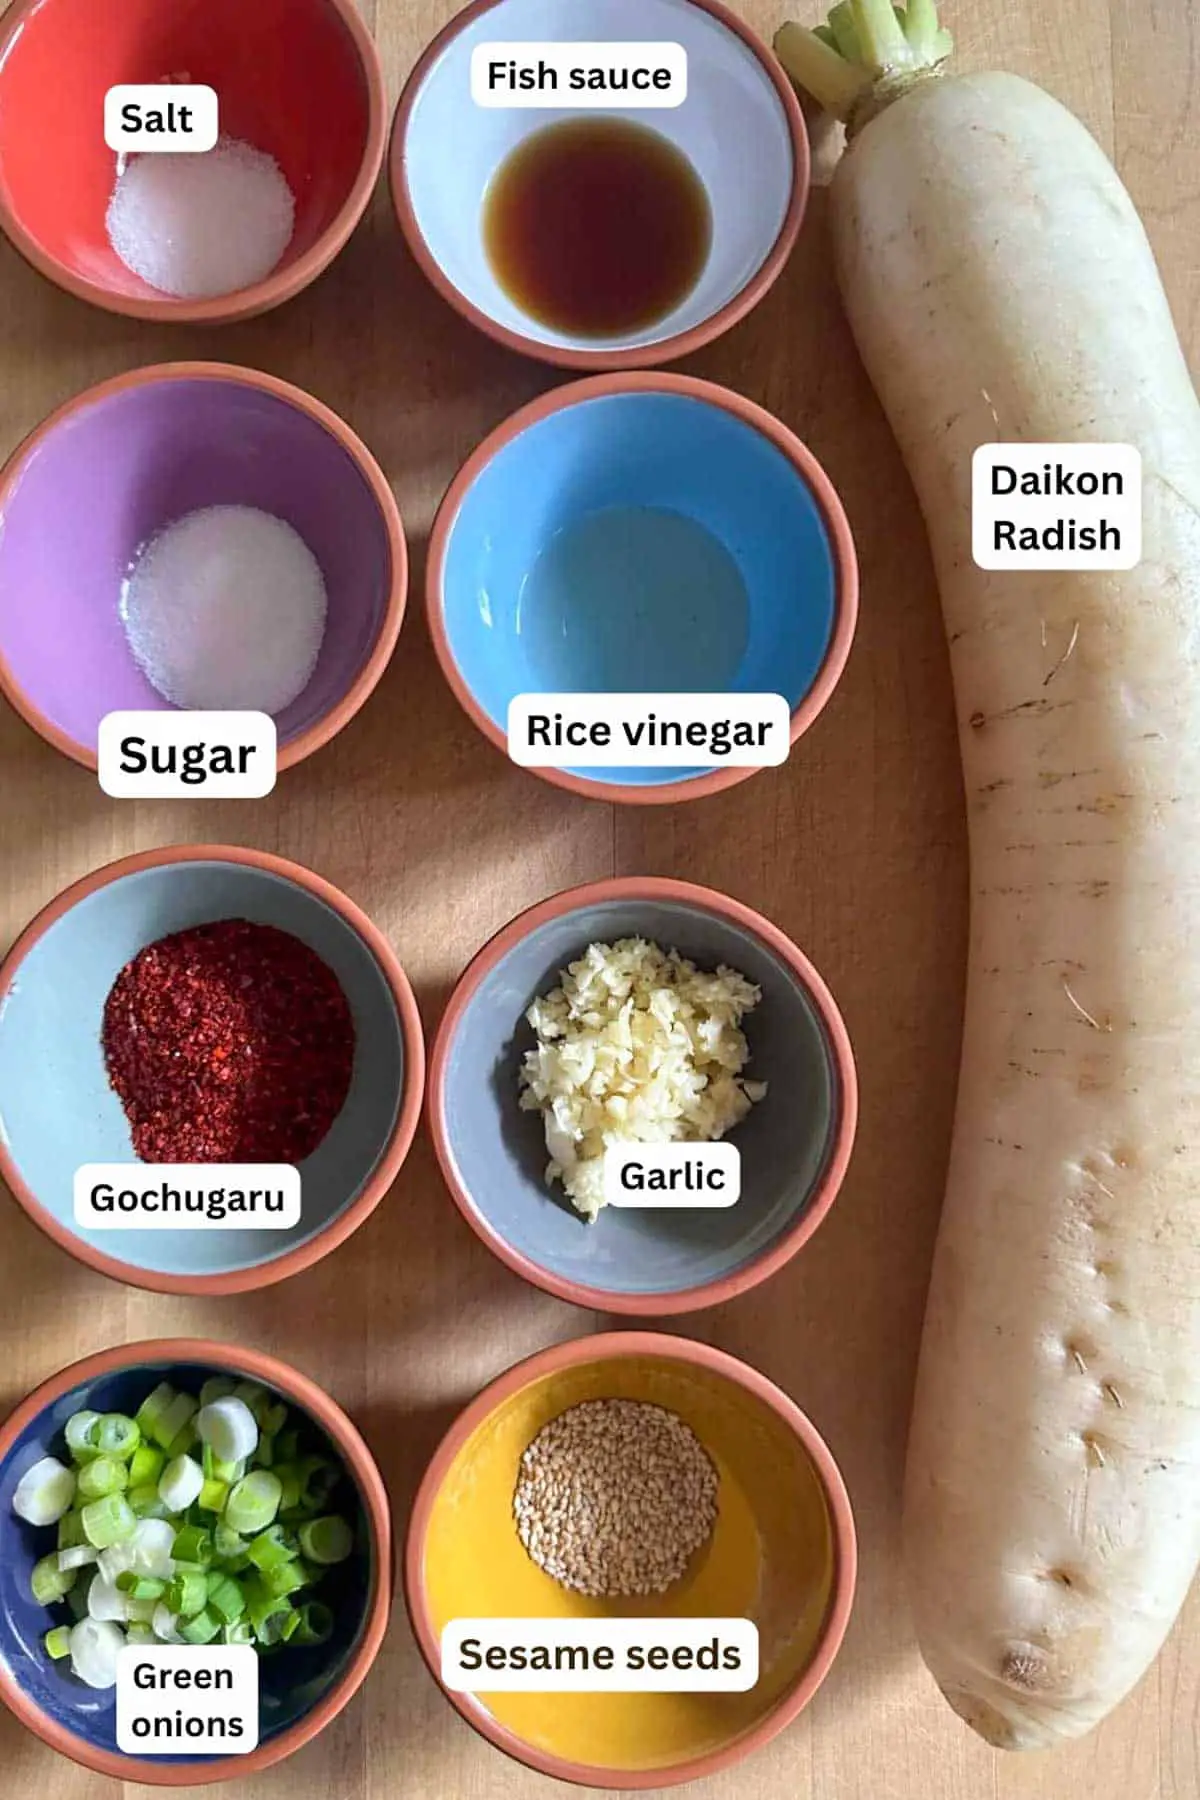 Bowls containing salt, fish sauce, sugar, rice vinegar, gochugaru, garlic, green onions, and sesame seeds. There is a daikon radish displayed next to these ingredients.